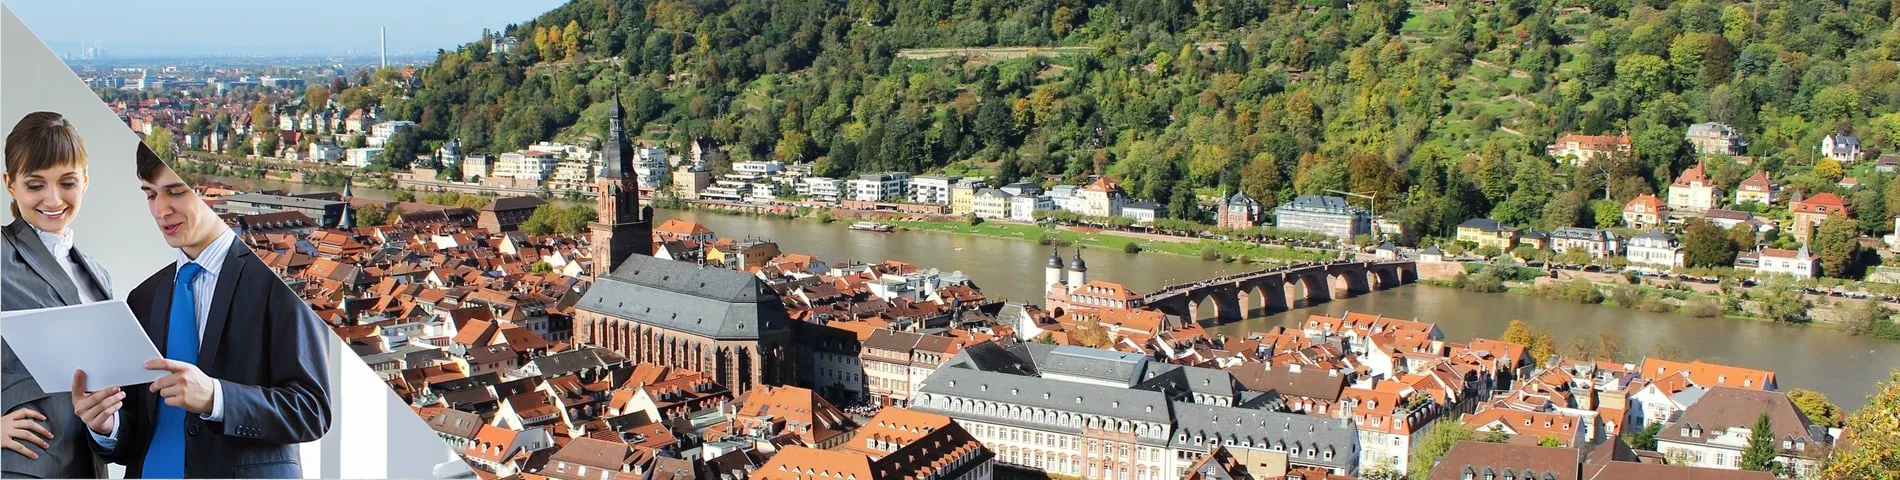 Heidelberg - Forretning En-til-en